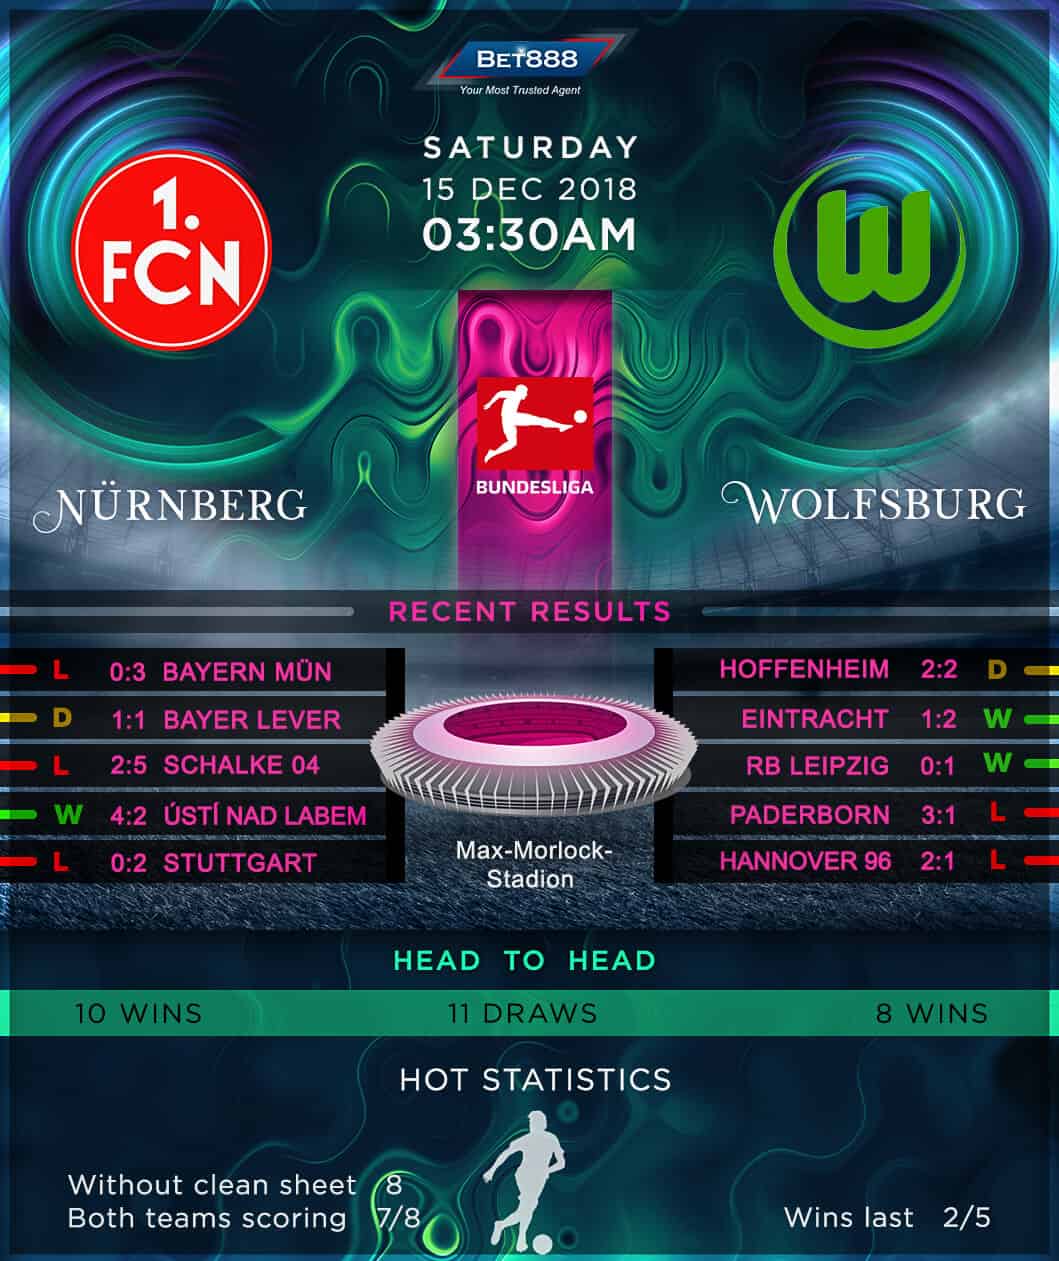 Nurnberg vs Wolfsburg 15/12/18